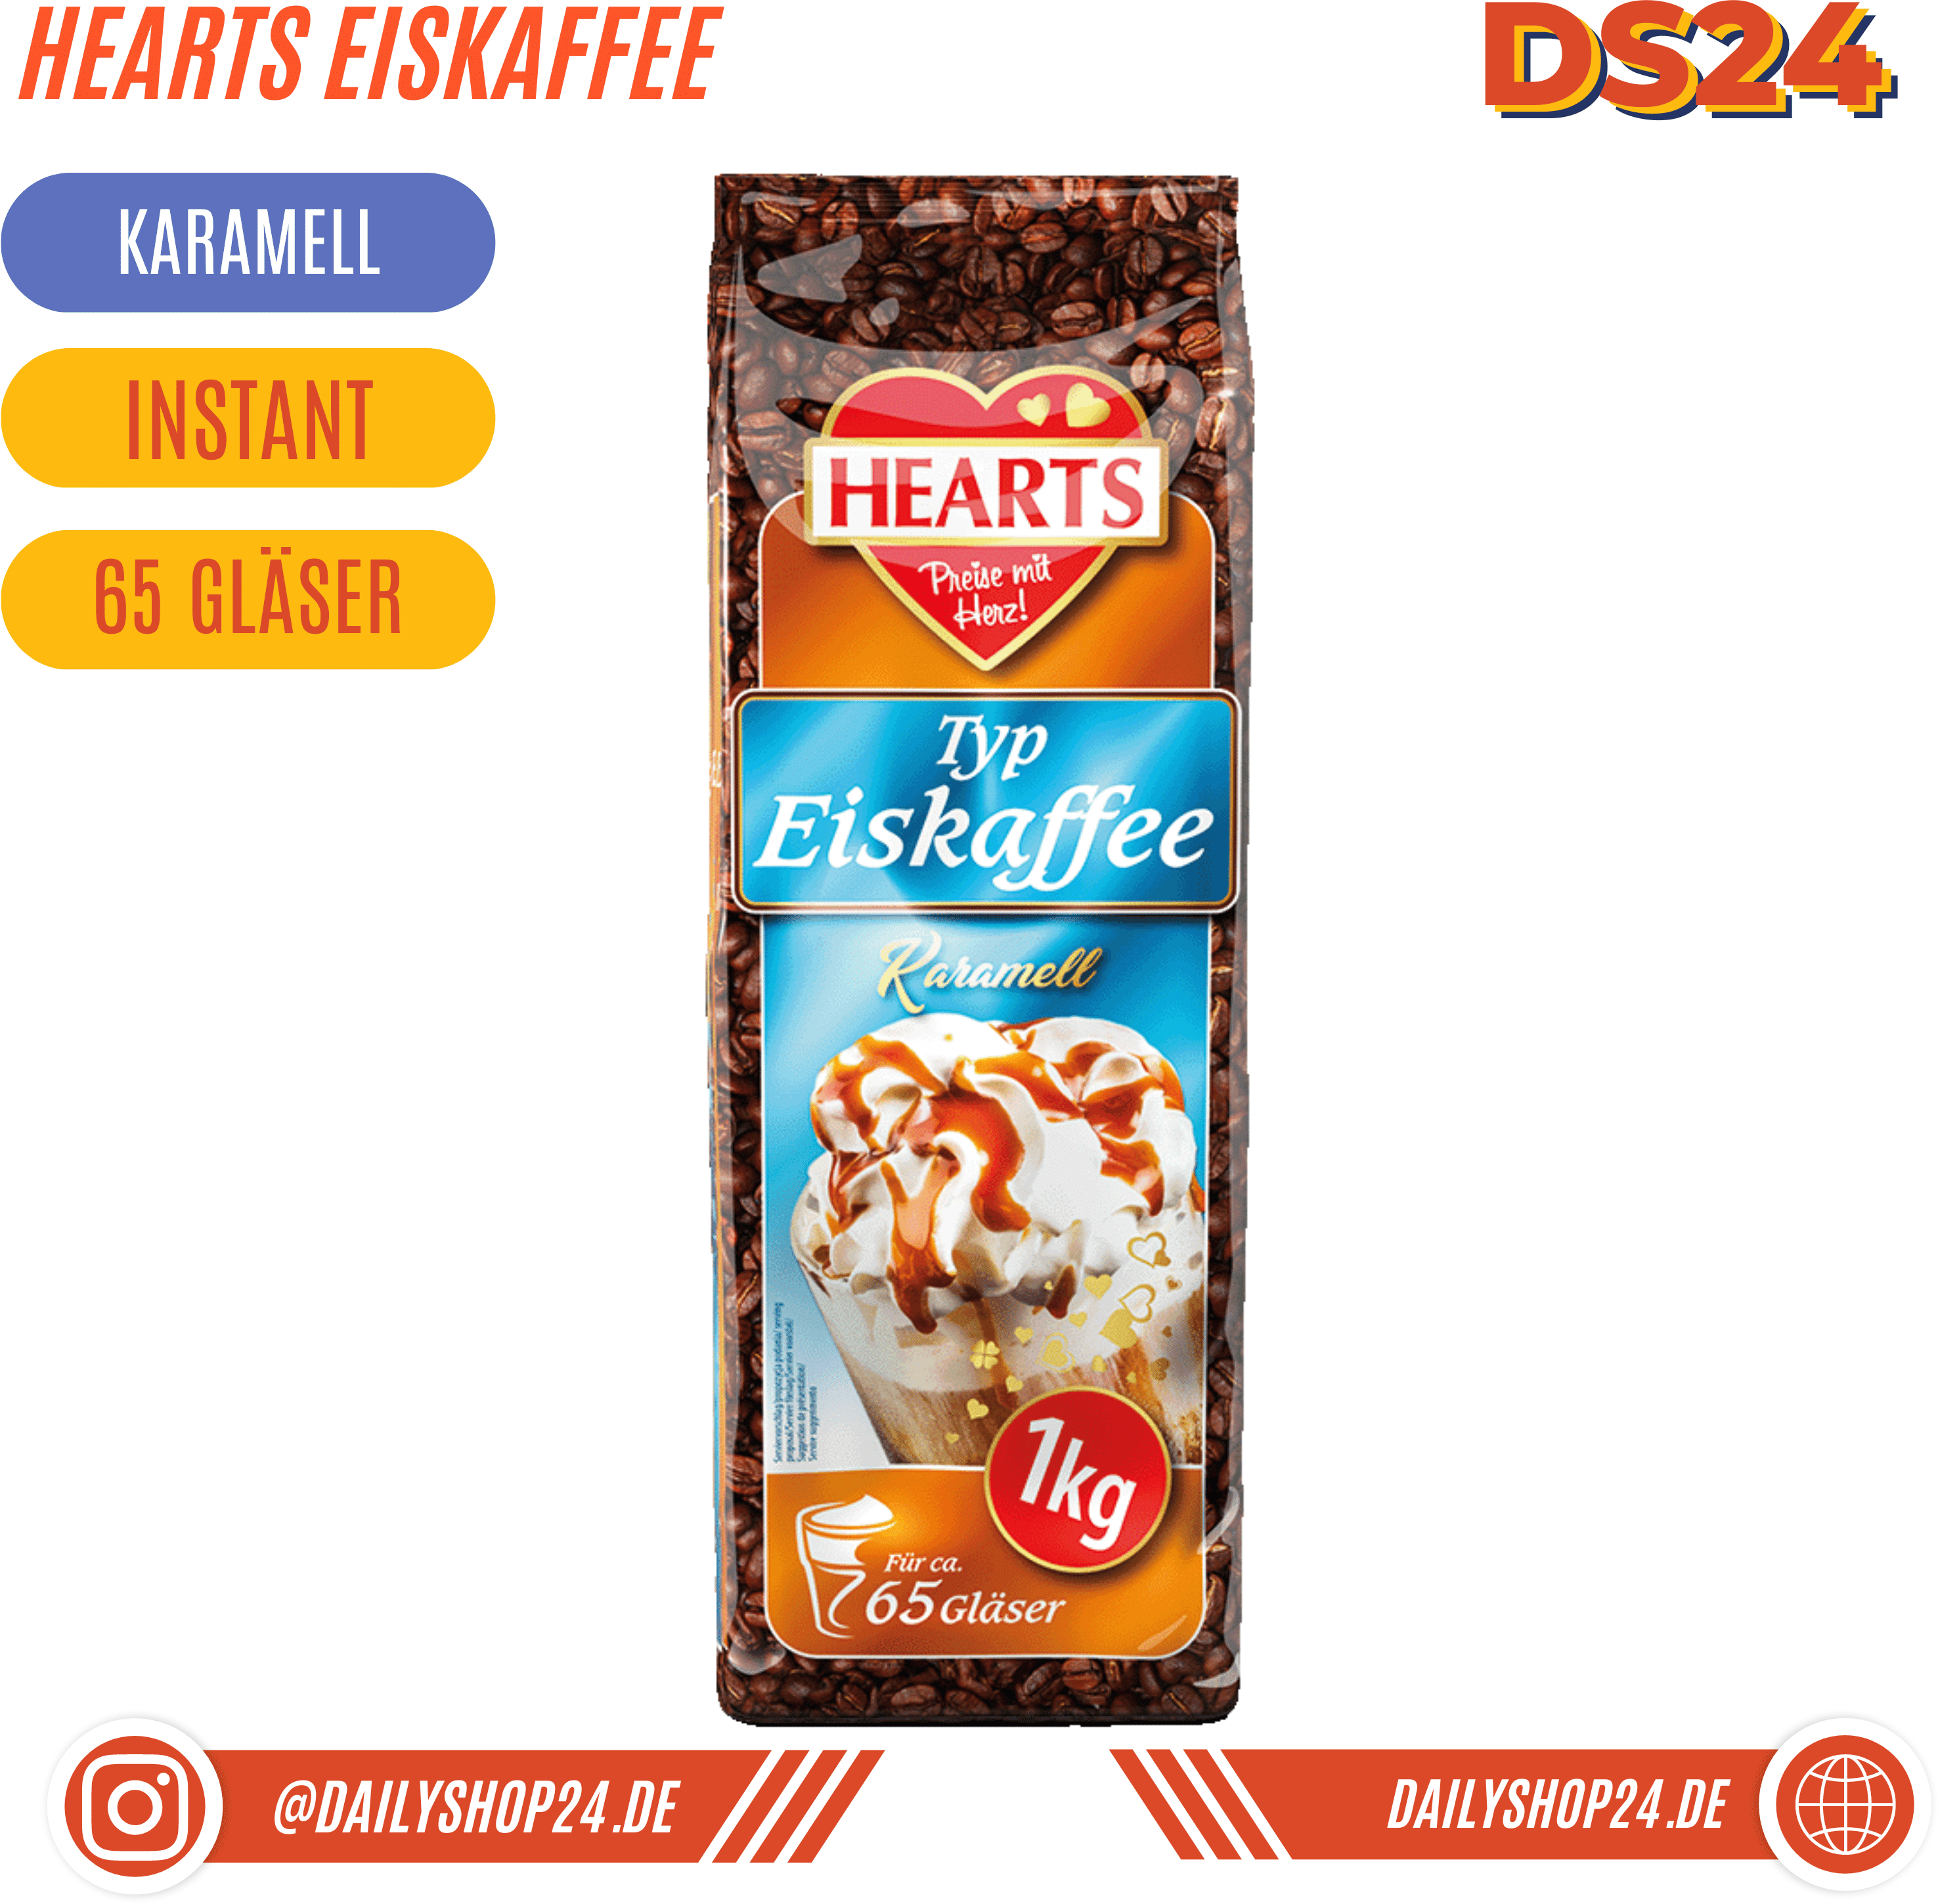 HEARTS Eiskaffee - 1 St√ock / Eiskaffee Karamell